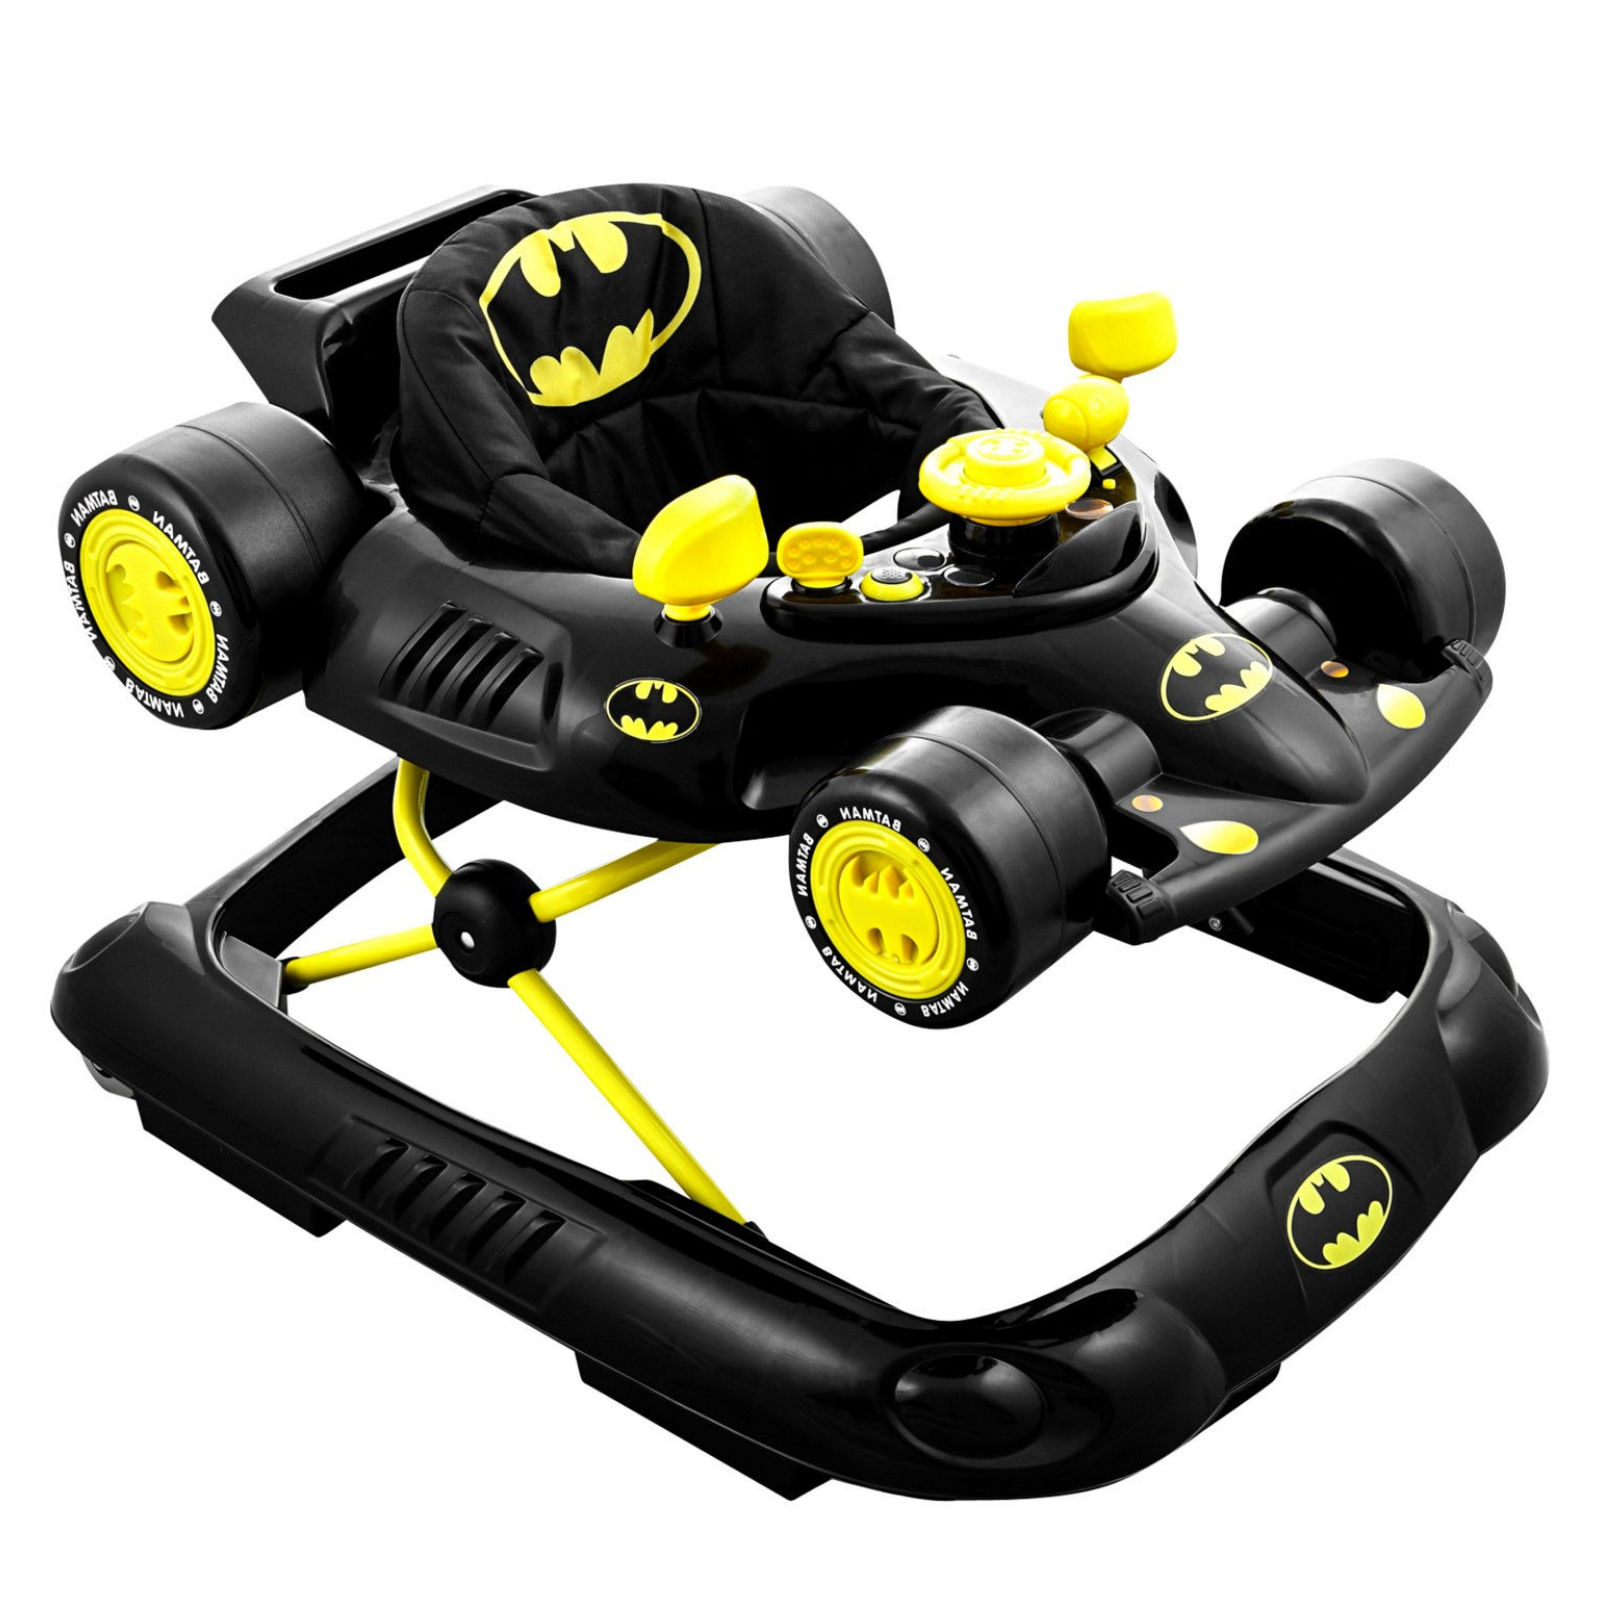 Batman 2in1 Baby Walker with Lights, Sounds & Vibration - Black